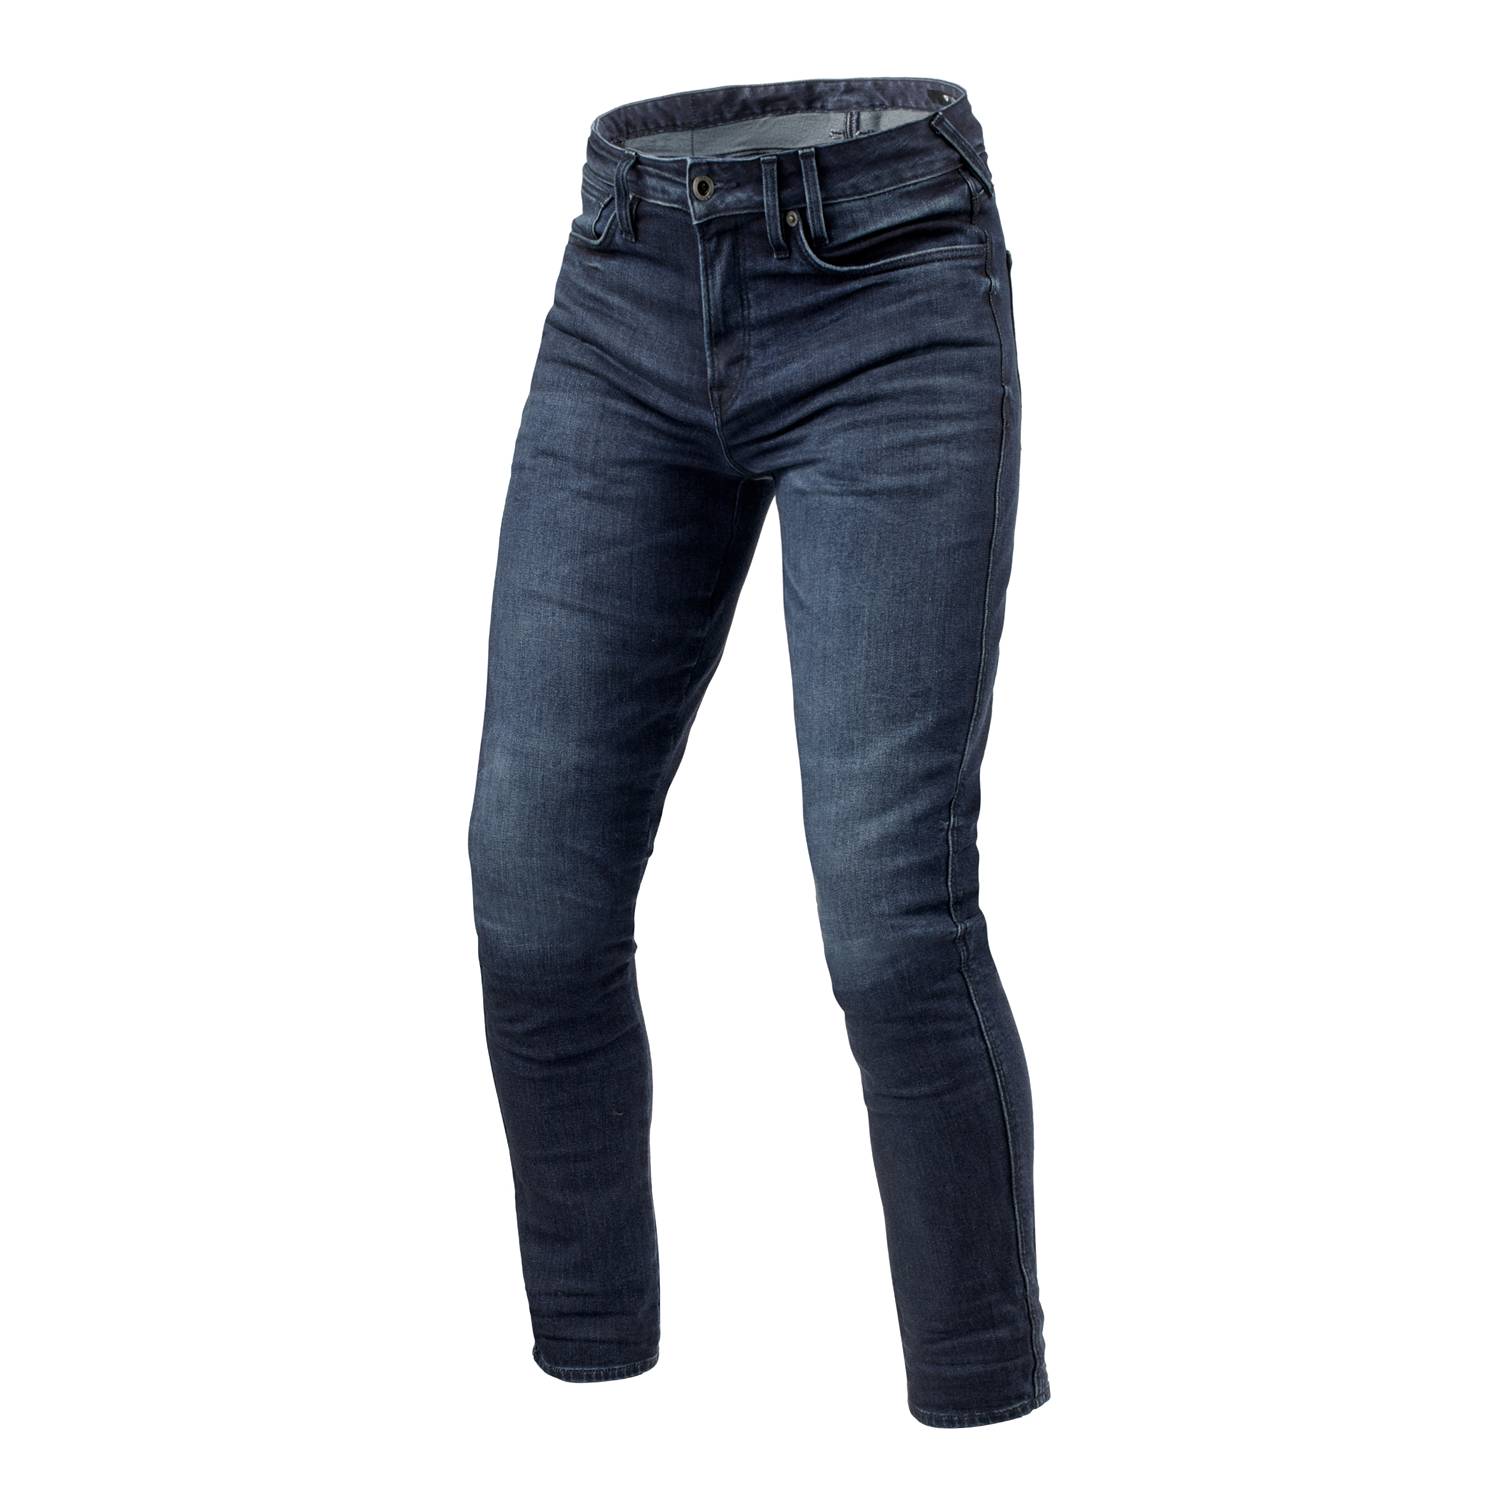 Image of REV'IT! Jeans Carlin SK Dark Blue Used L36 Motorcycle Jeans Talla L36/W34